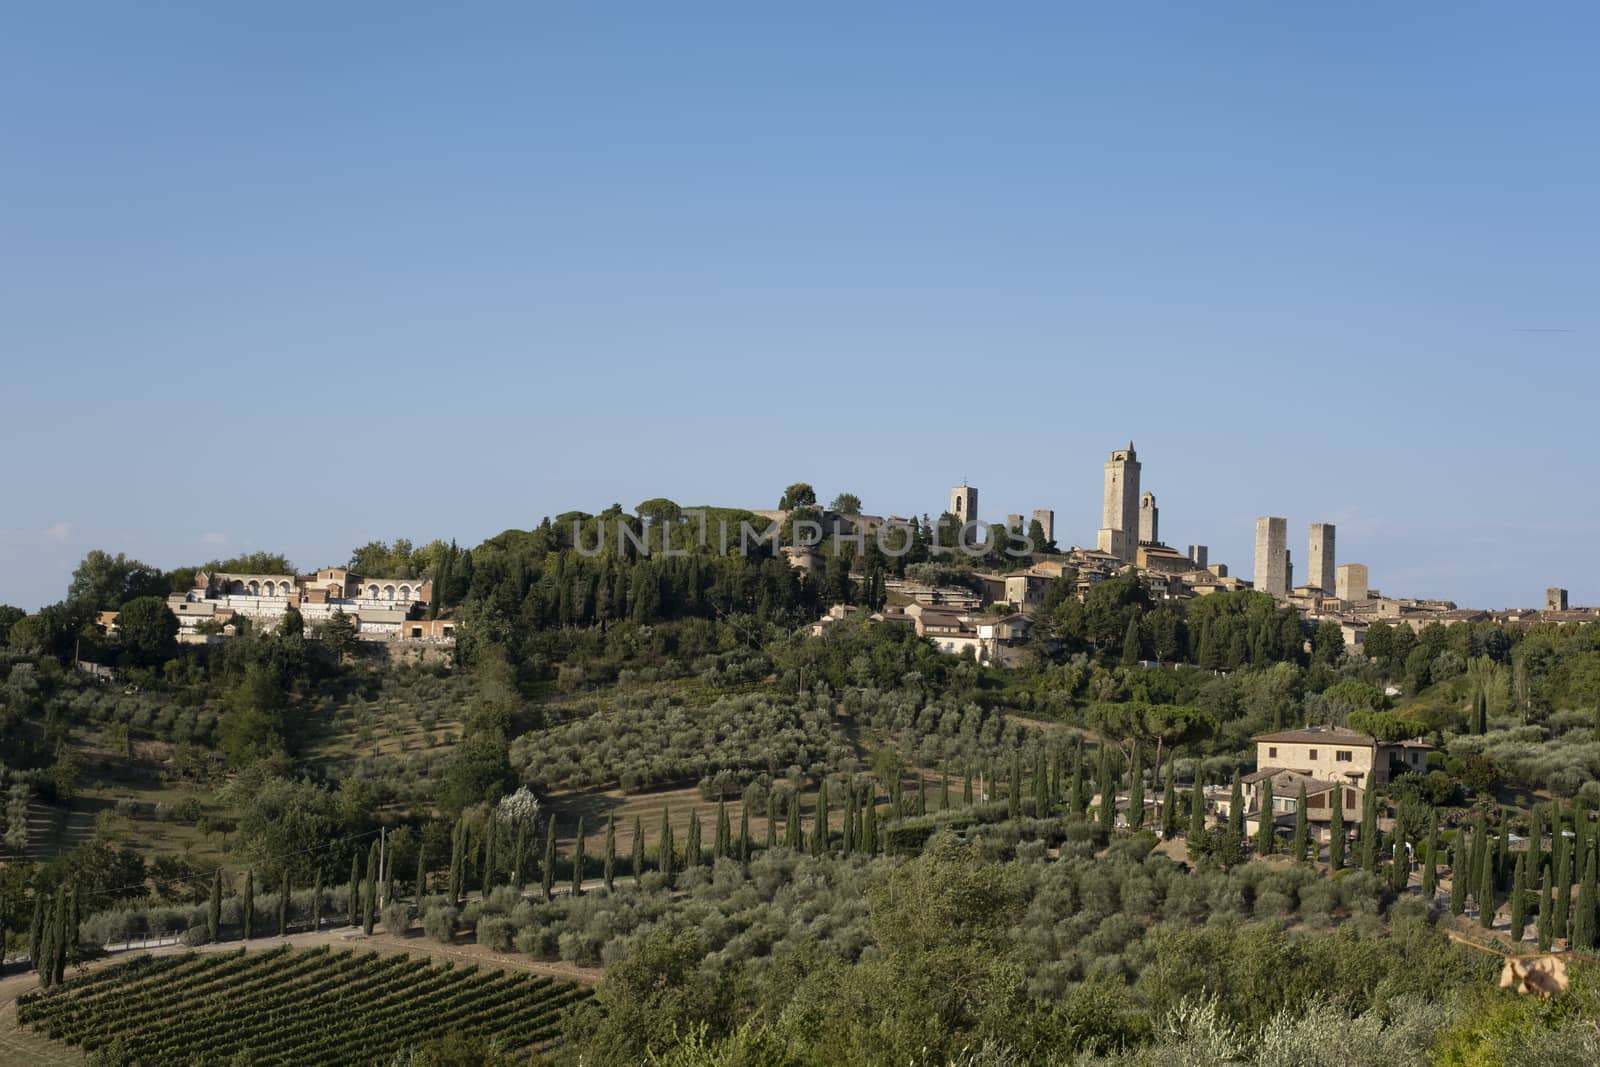 The medieval skyline of San Gimignano. Siena, Italy. by Tjeerdkruse